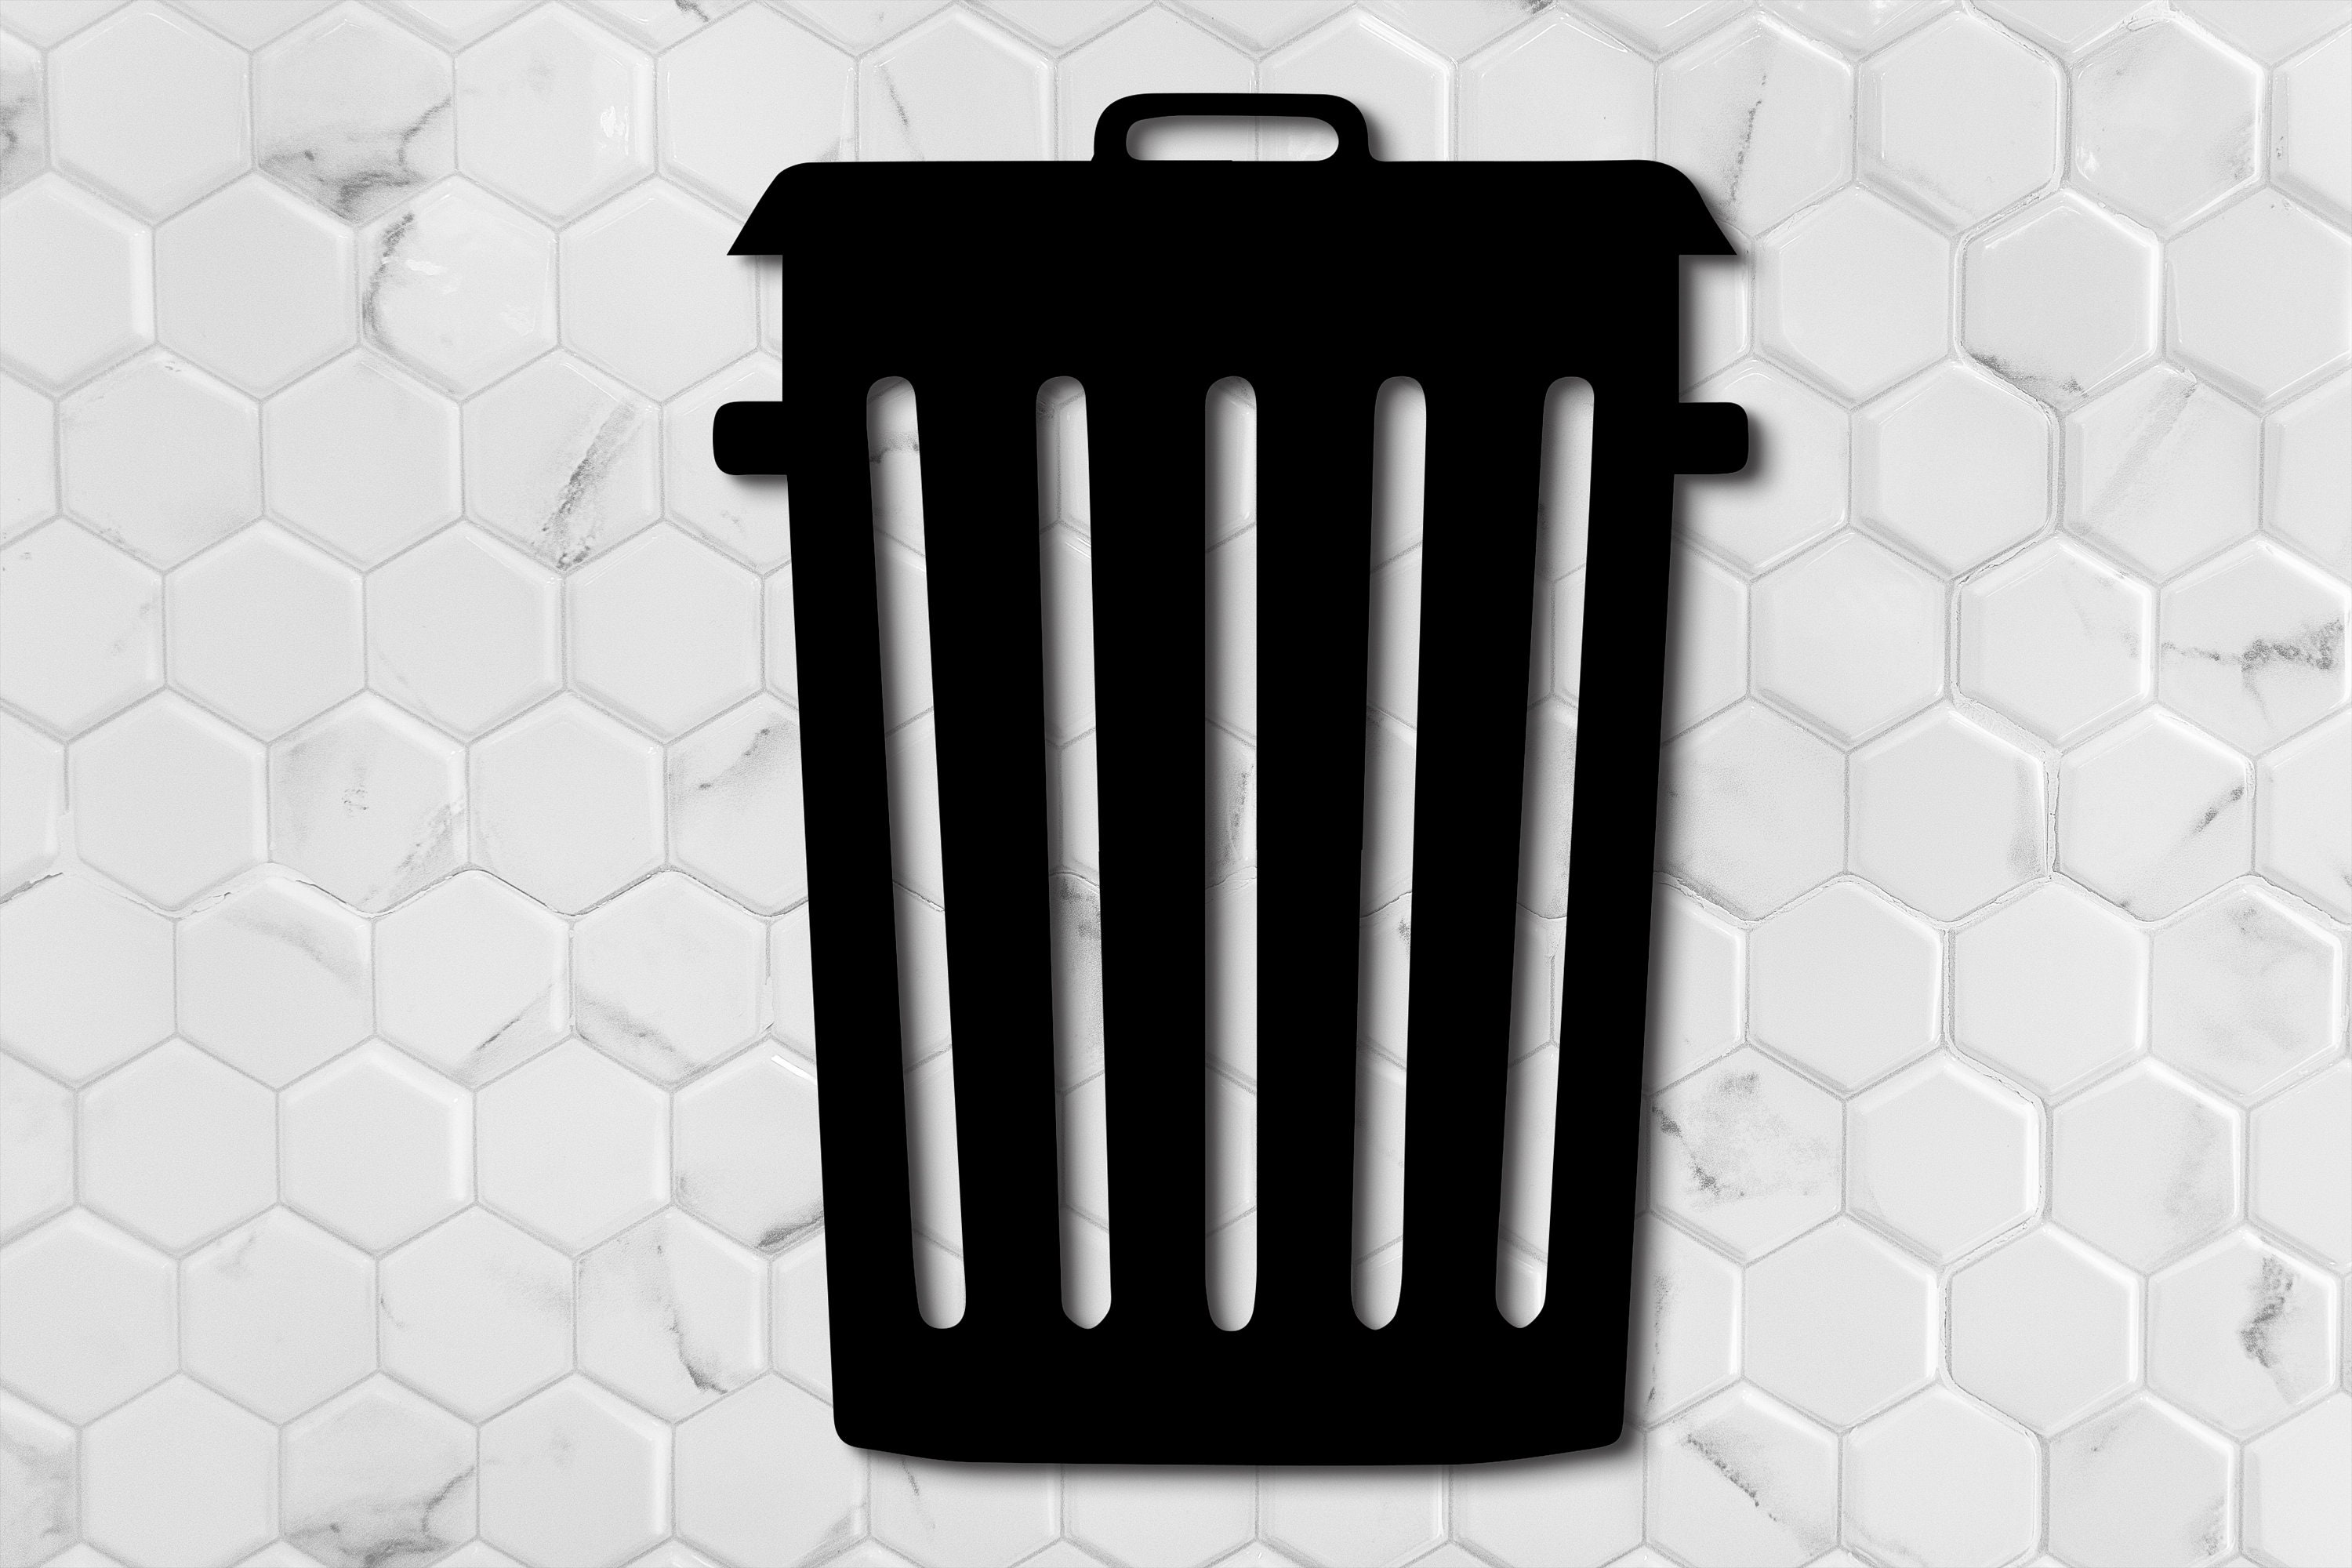 Flextrash, Small, sustainable waste bin